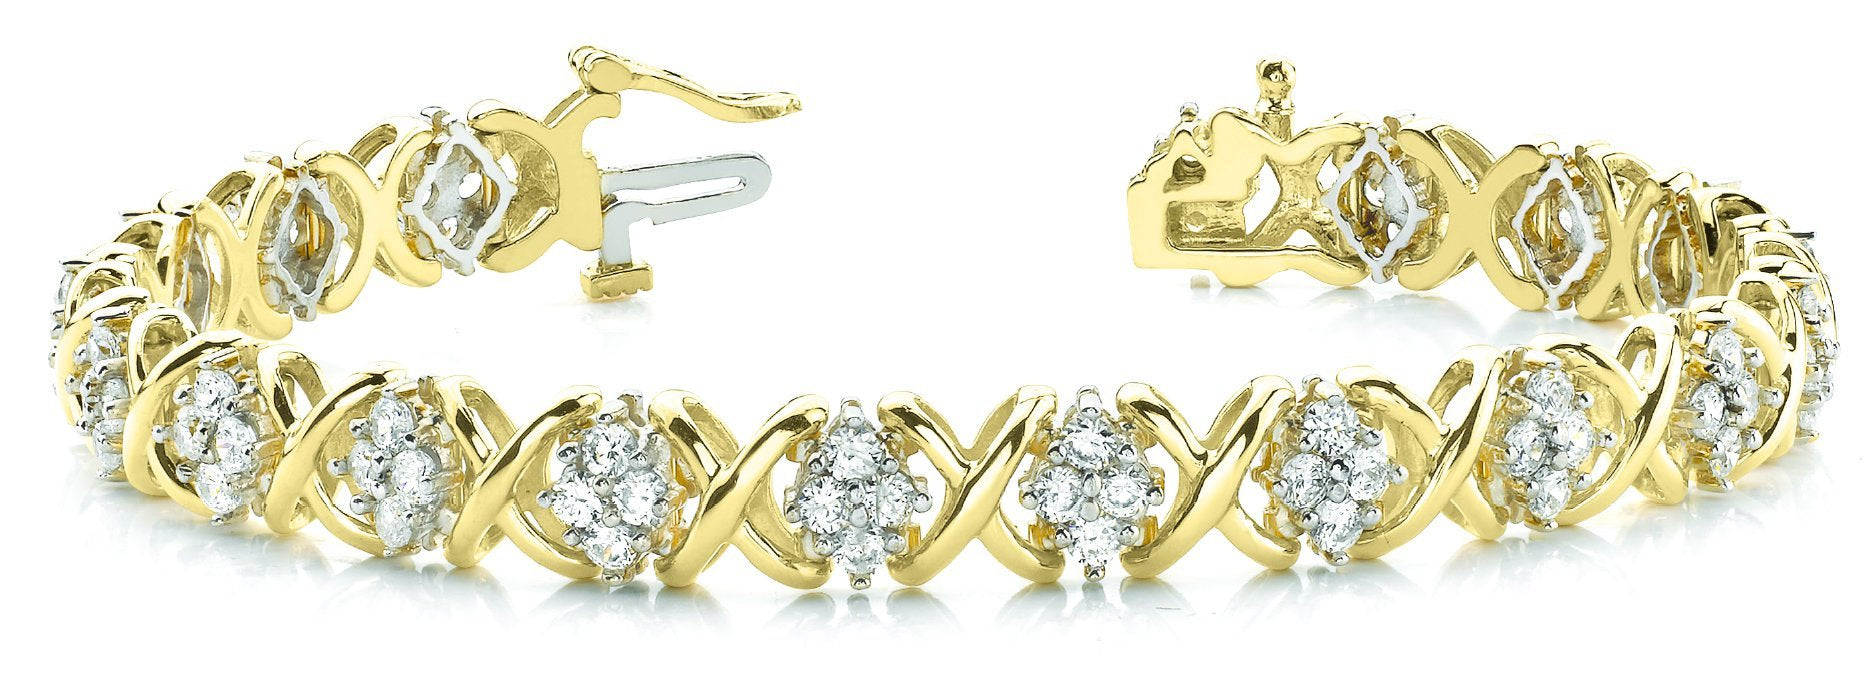 Fancy Diamond Bracelet Ladies 3.65ct tw - 14kt Gold